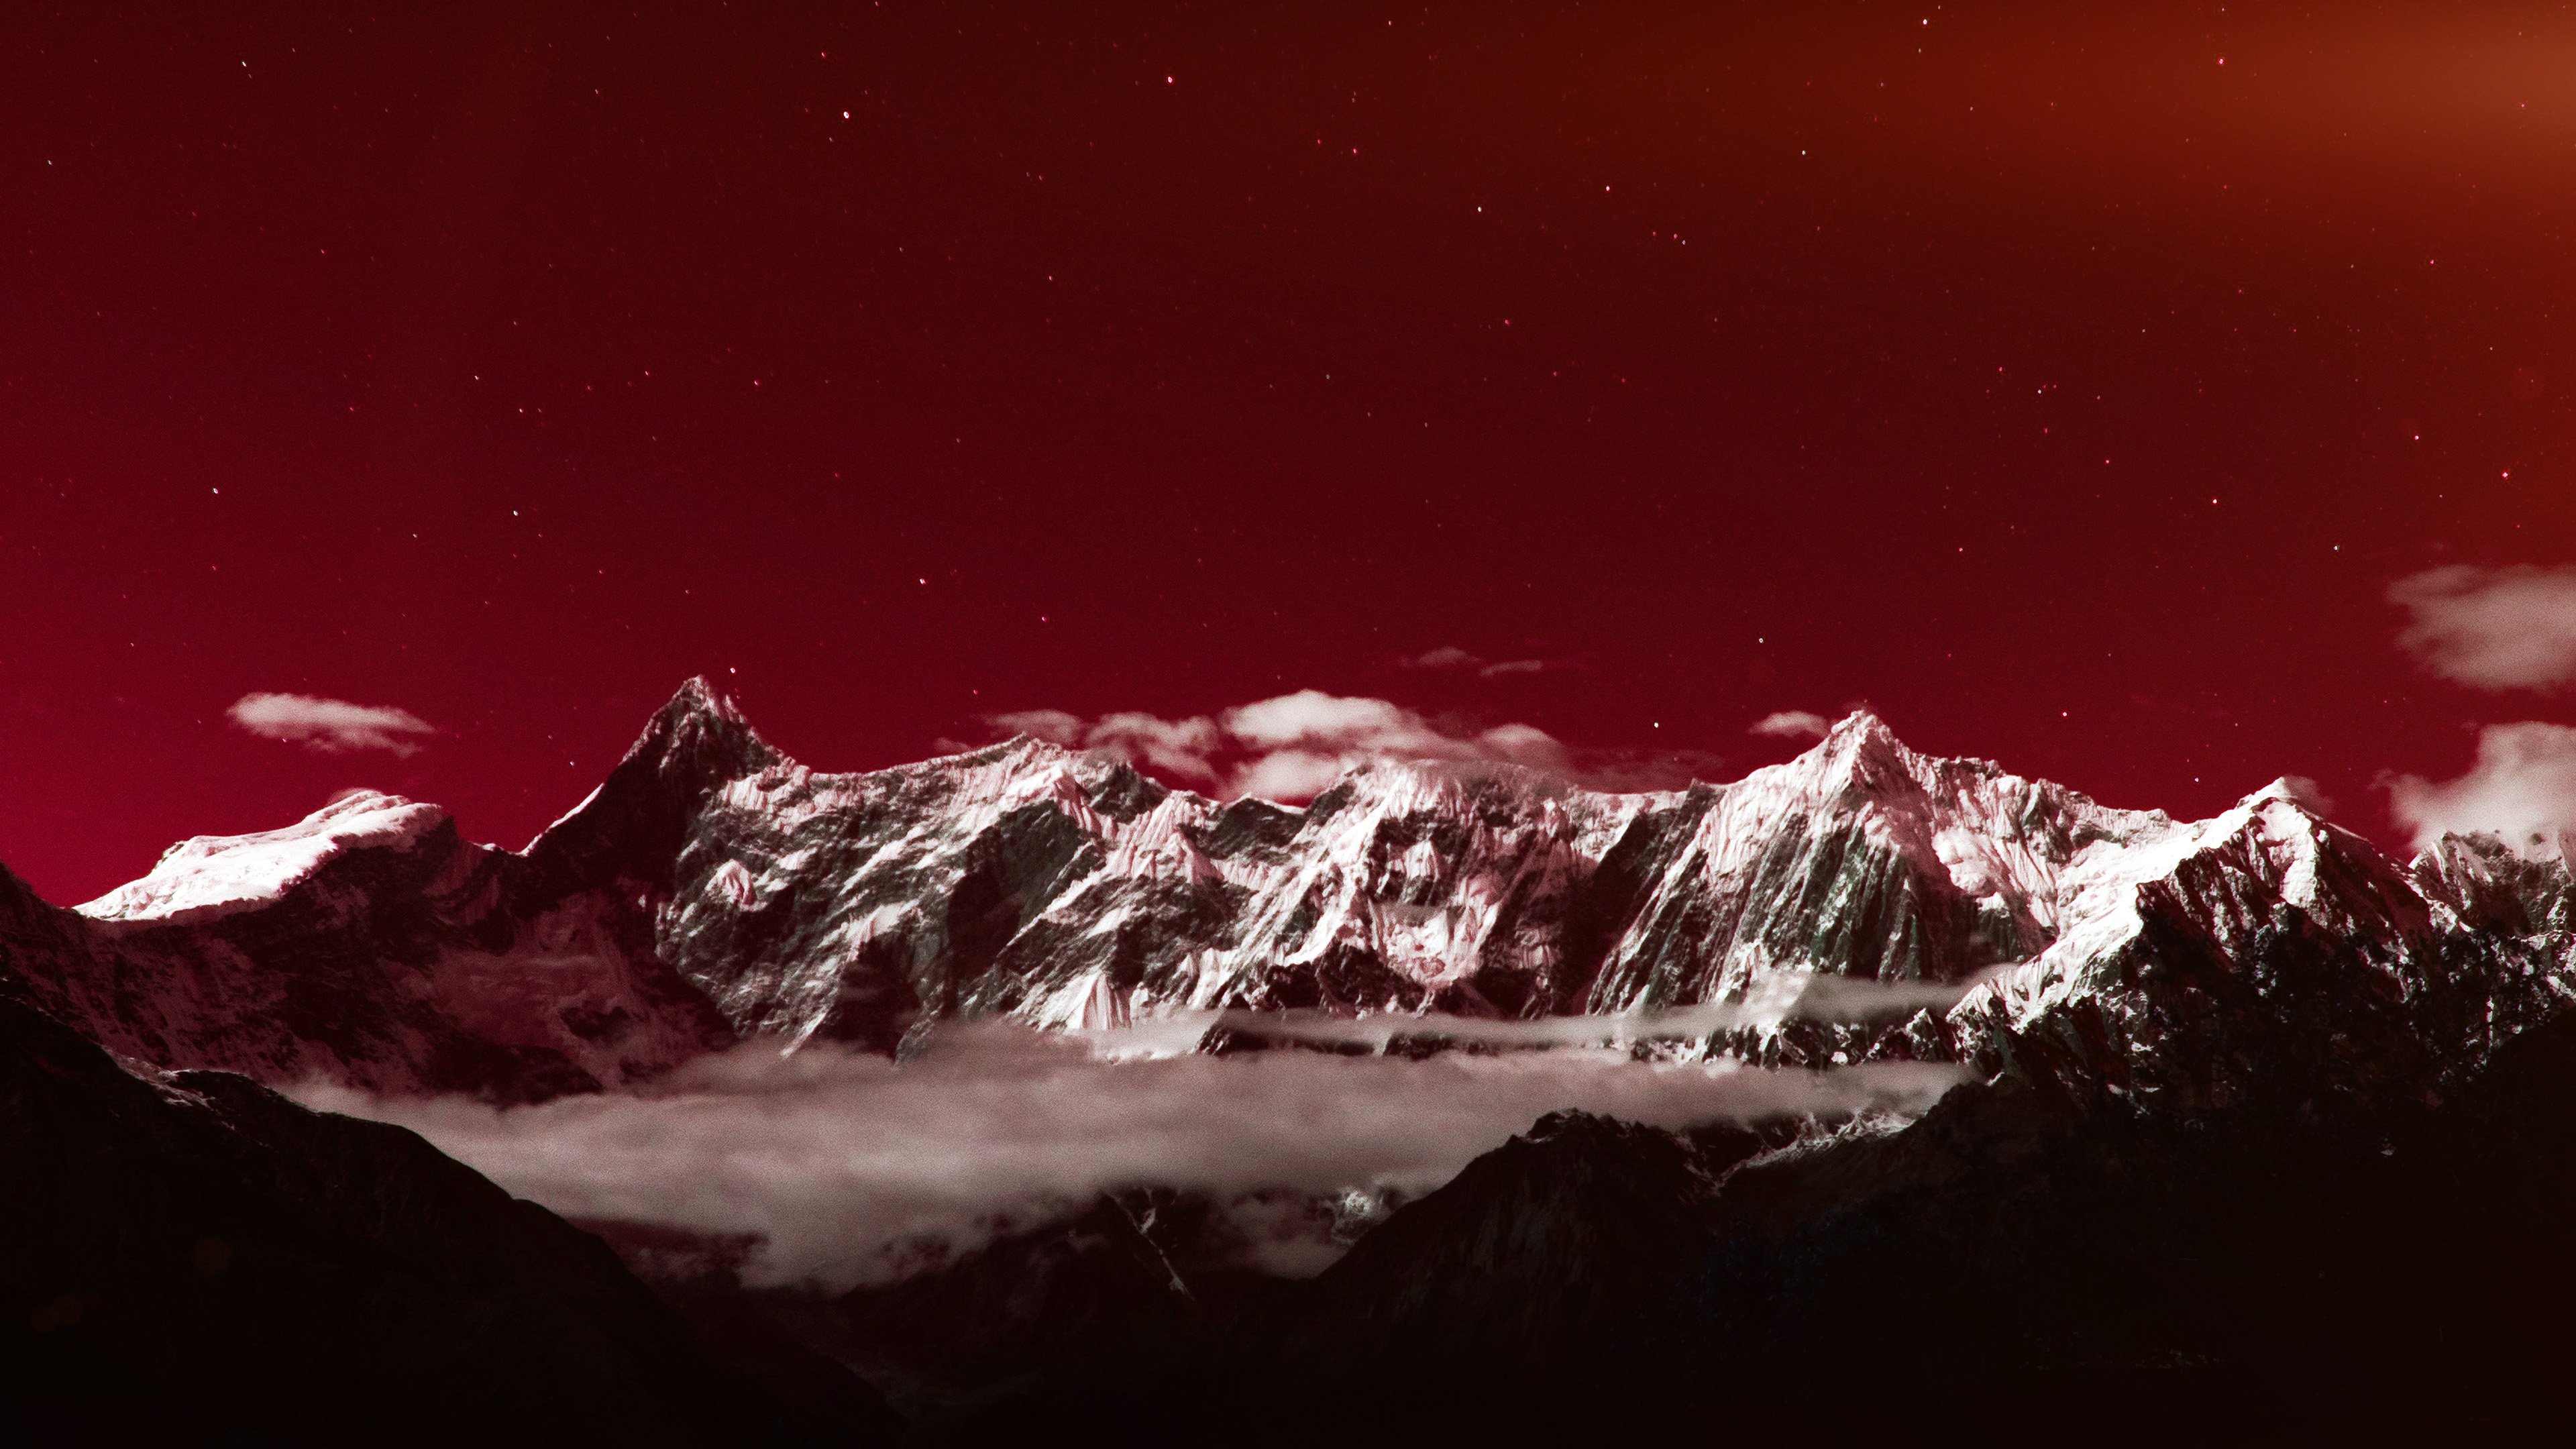 wallpaper for desktop, laptop. mountain snow dark red winter sky star